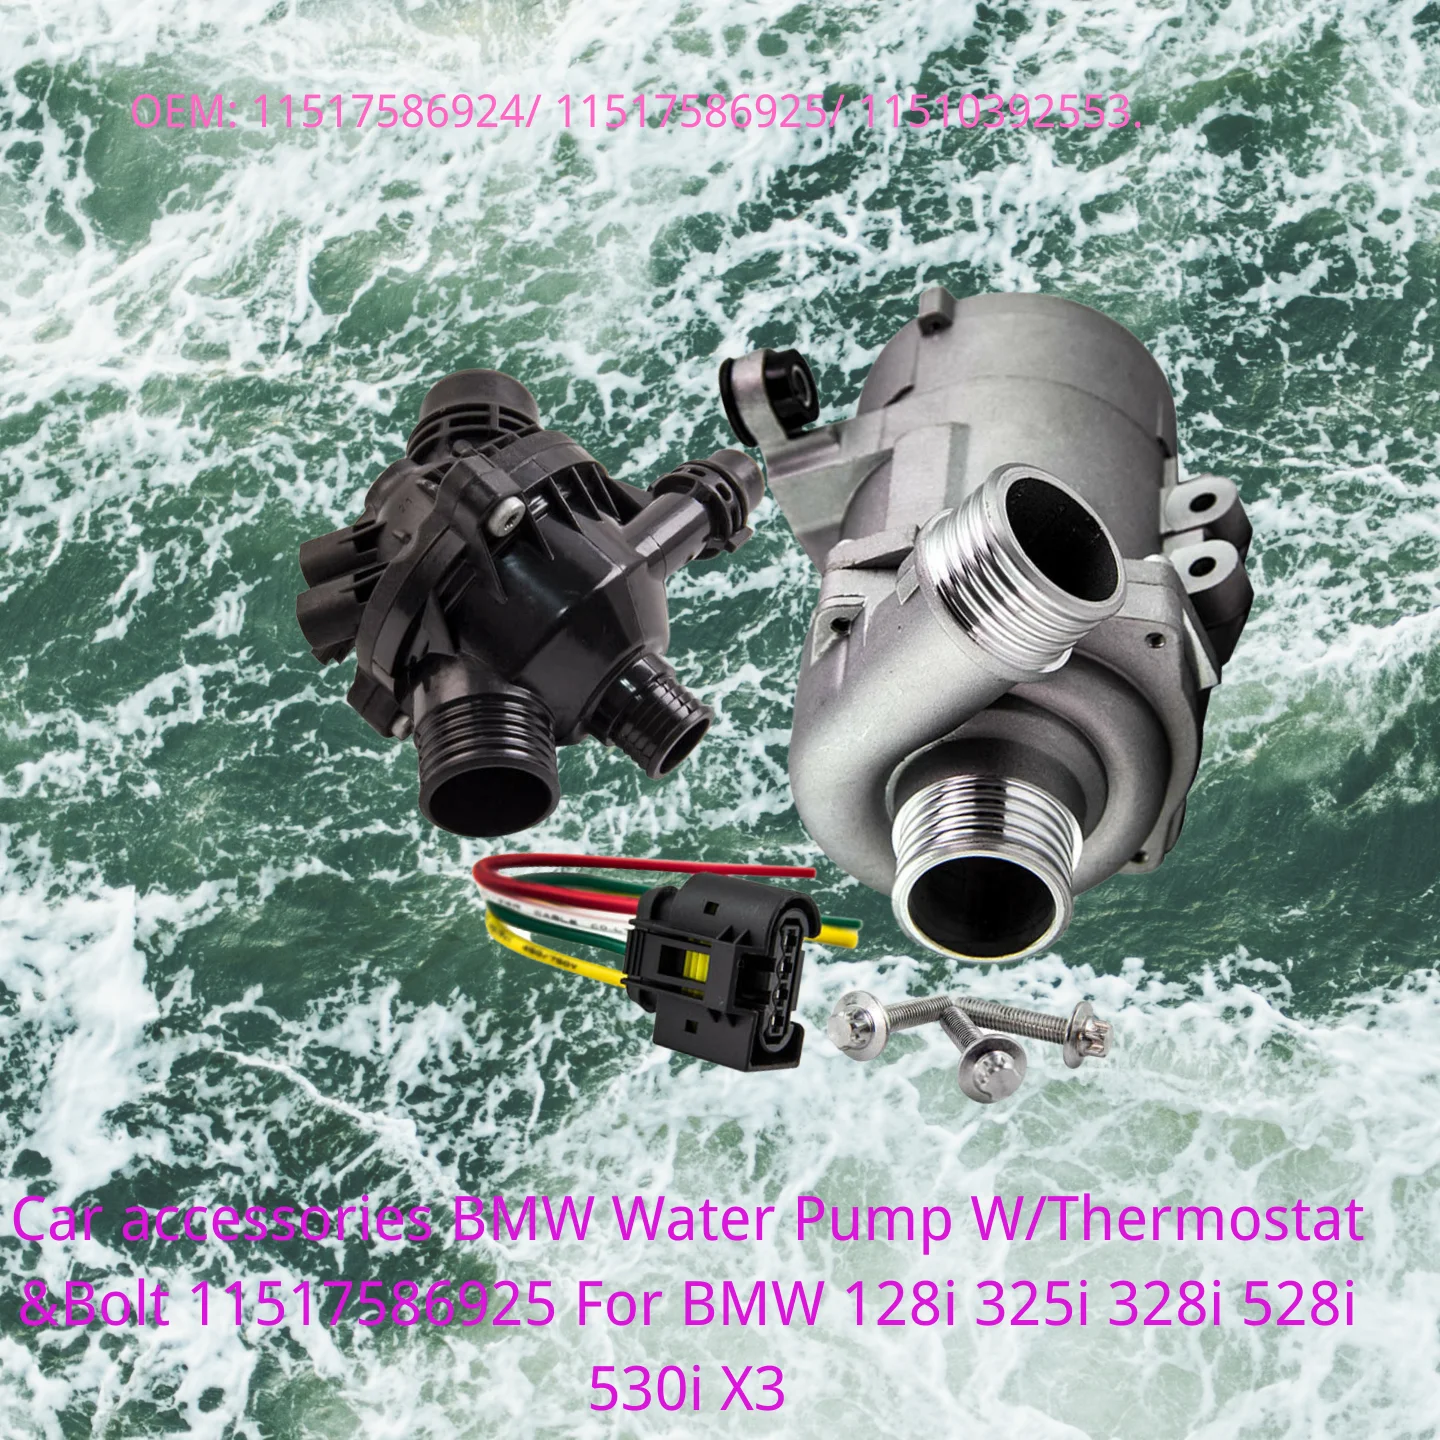 

Car accessories BMW Water Pump W/Thermostat &Bolt 11517586925 For BMW 128i 325i 328i 528i 530i X3